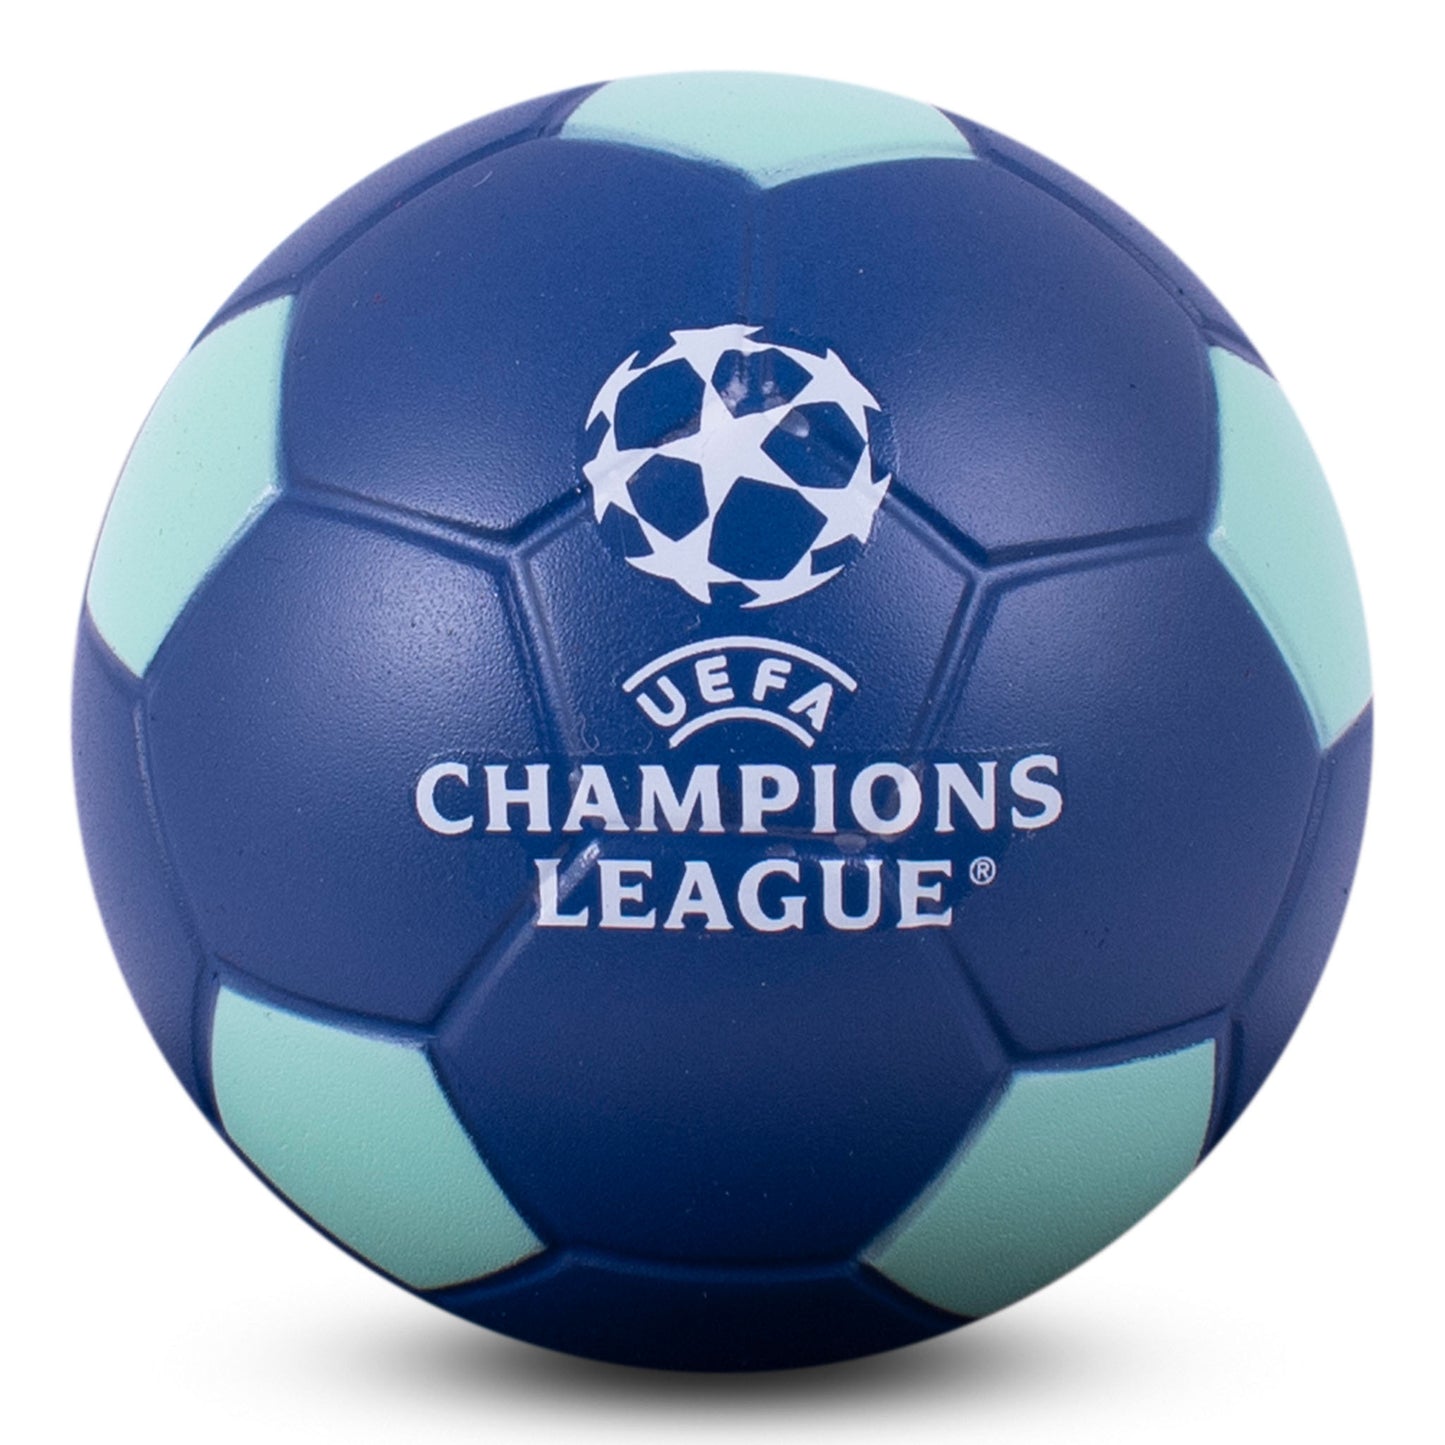 UEFA Champions League Stress Ball